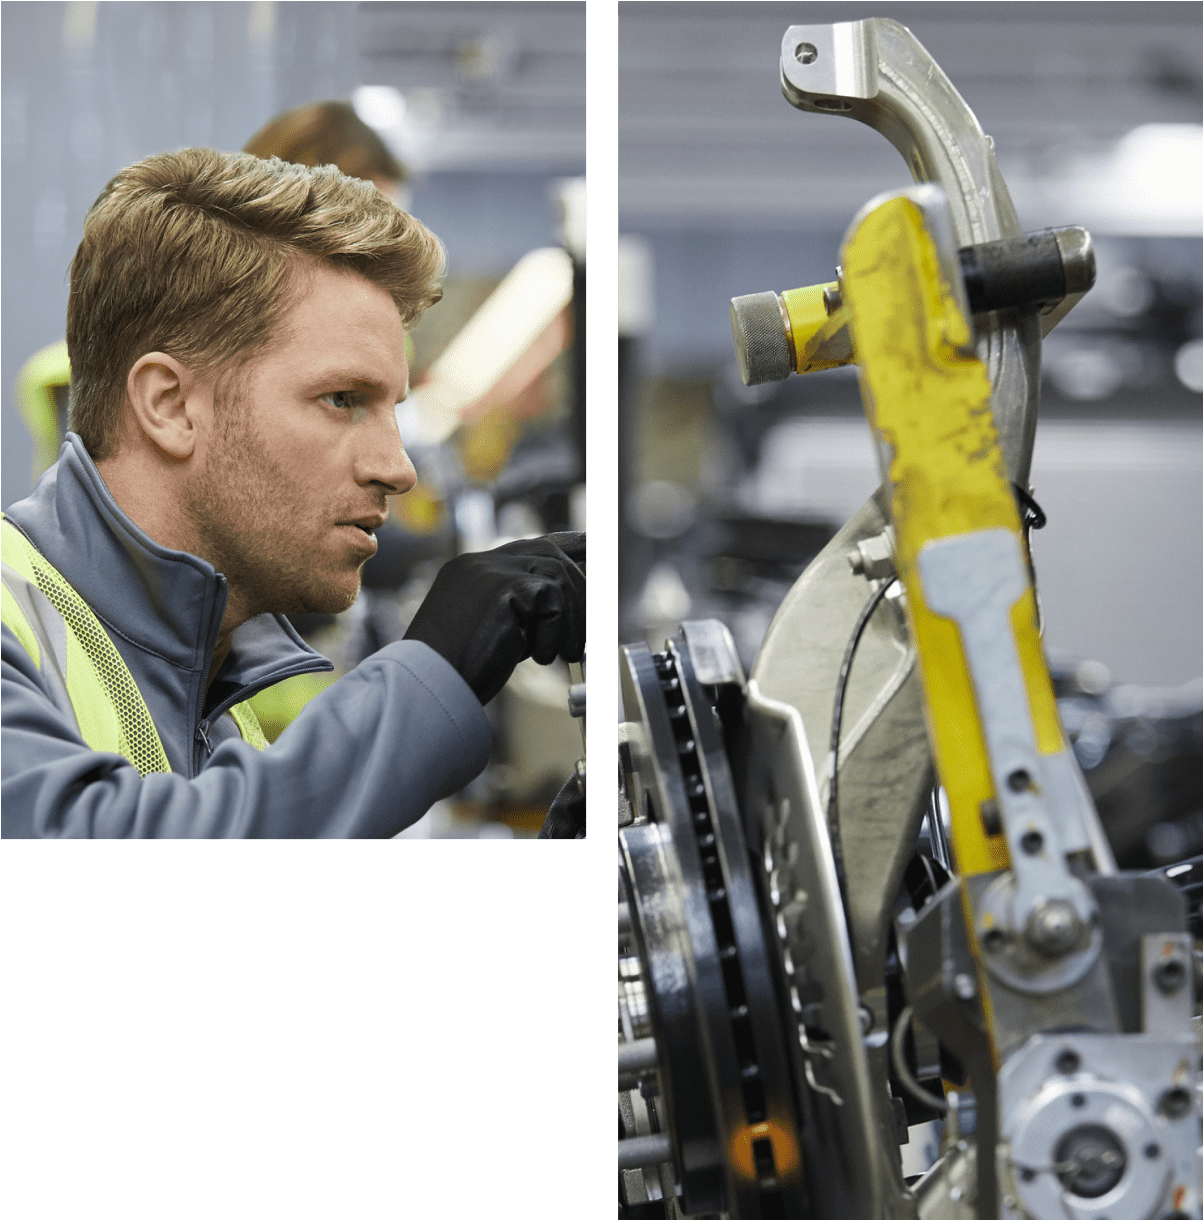 Worker assembling automotive components